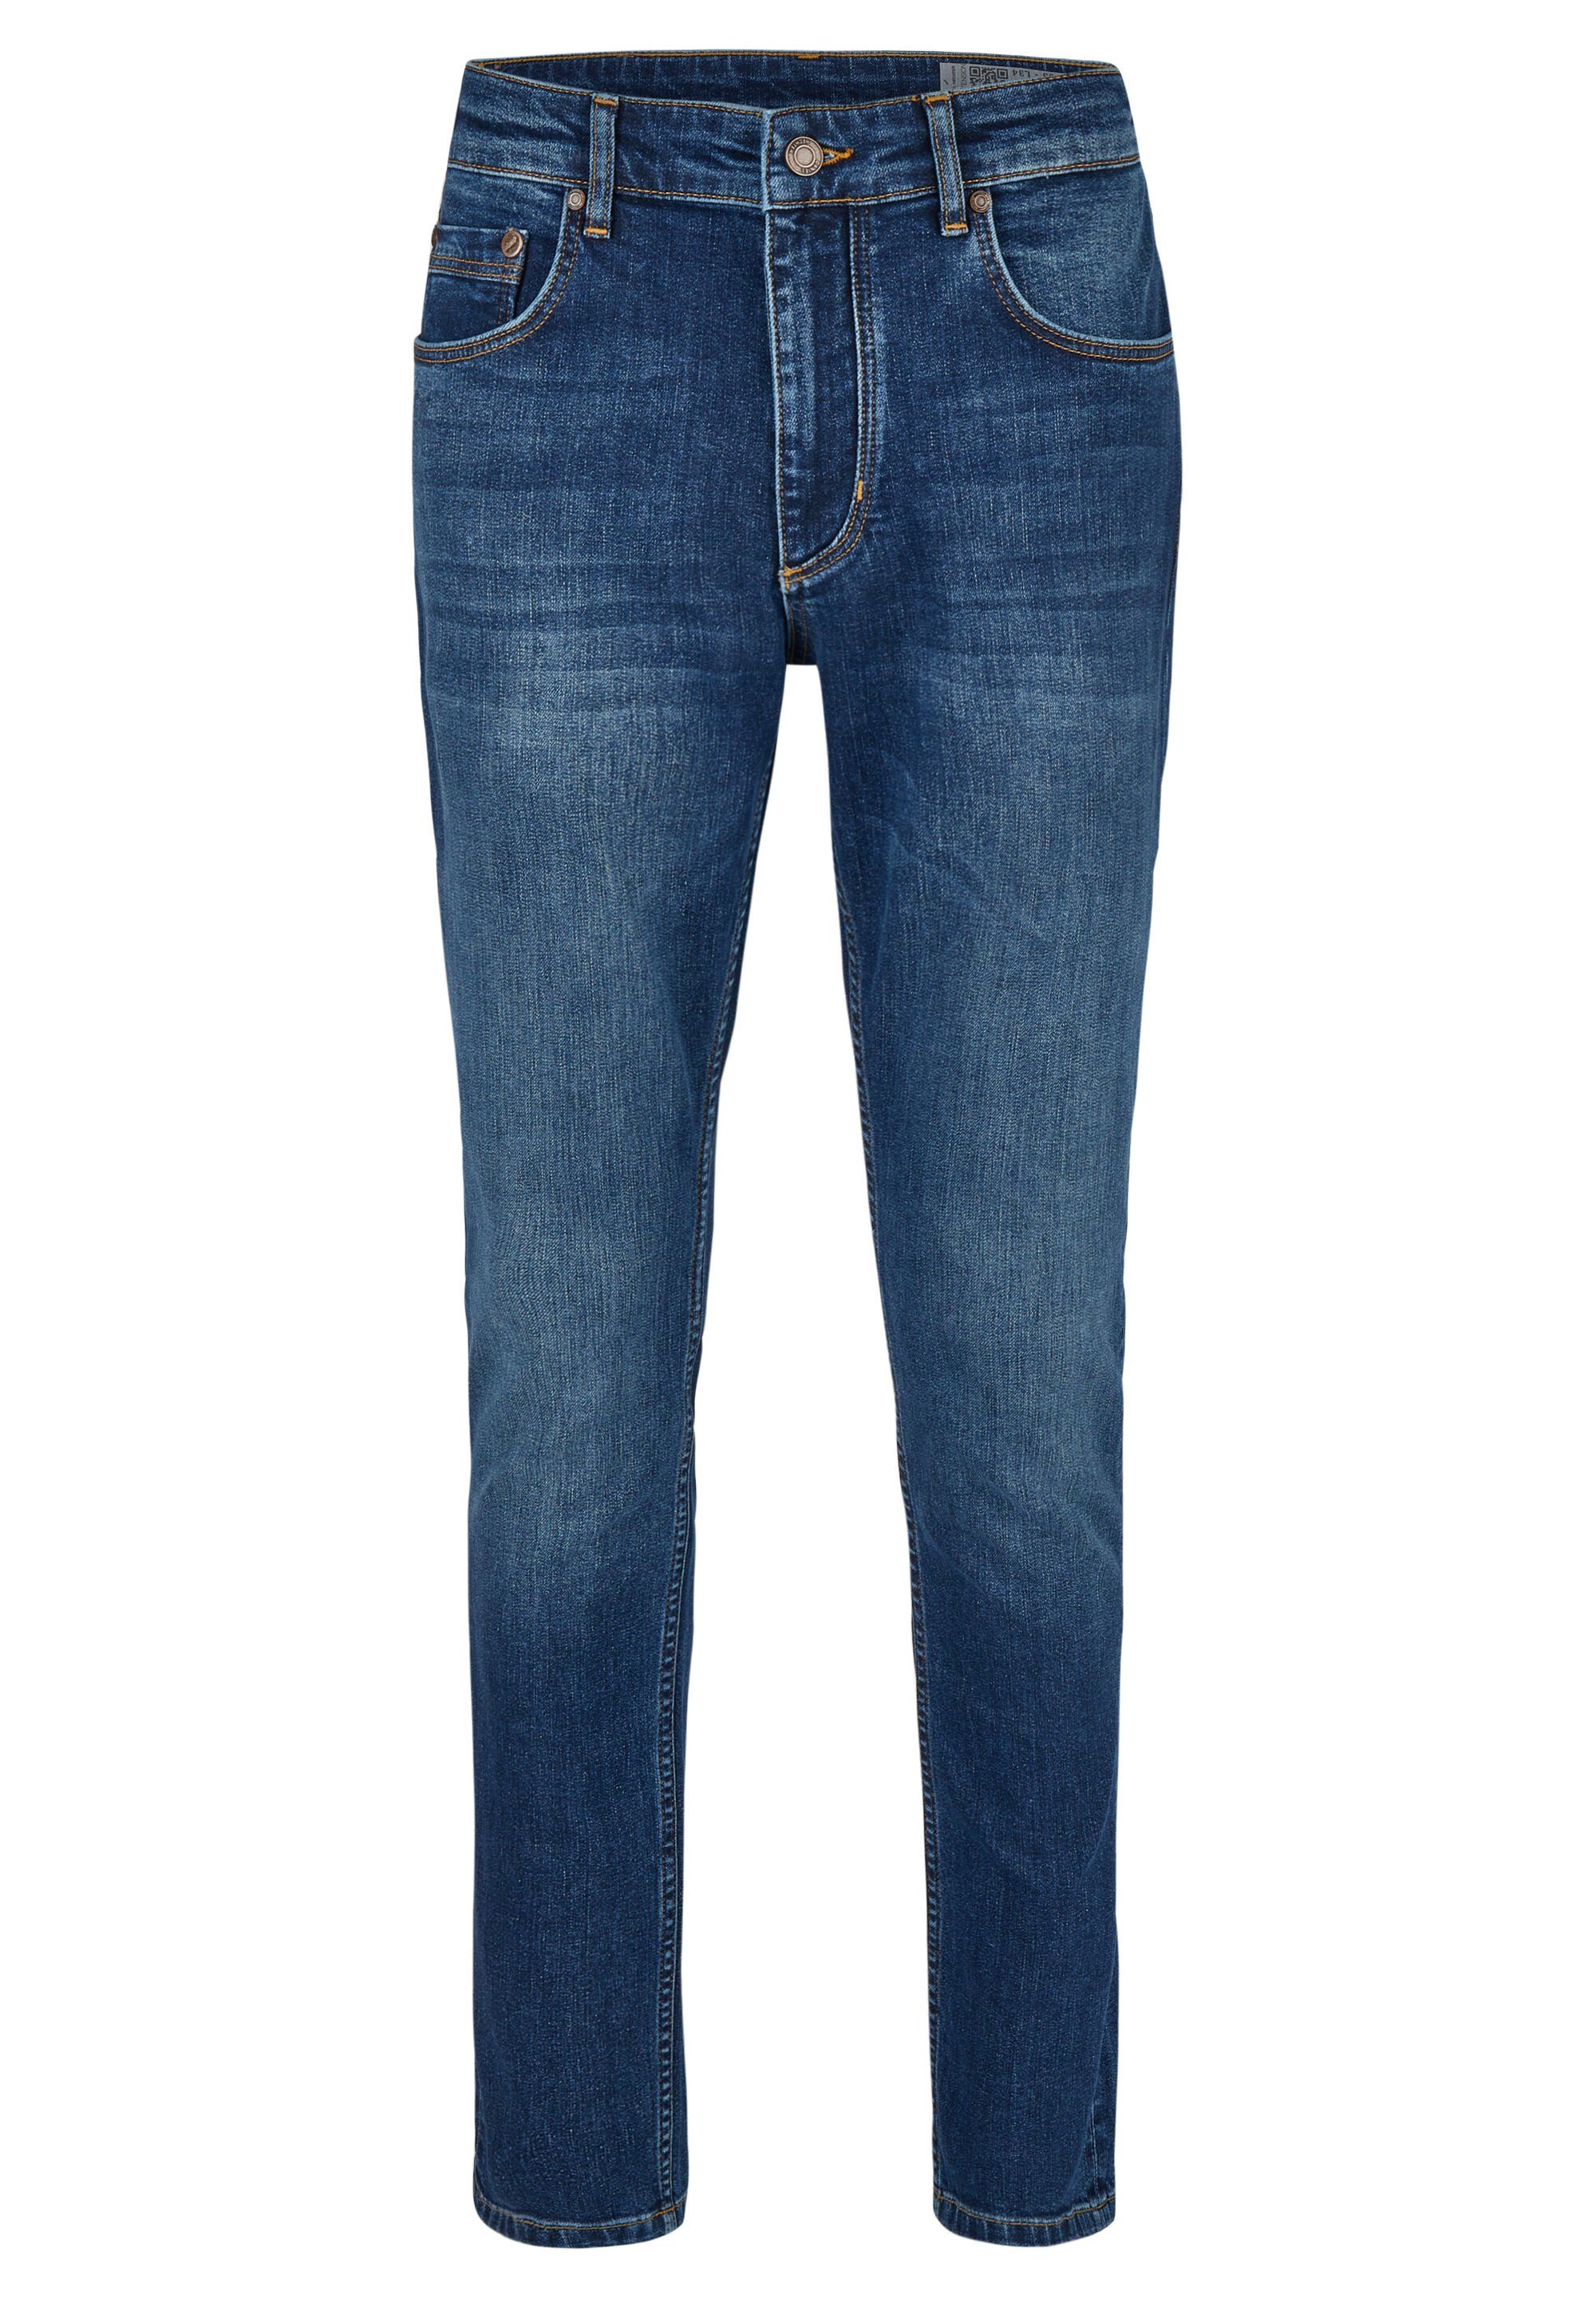 HECHTER PARIS 5-Pocket-Jeans blue dark Unimuster